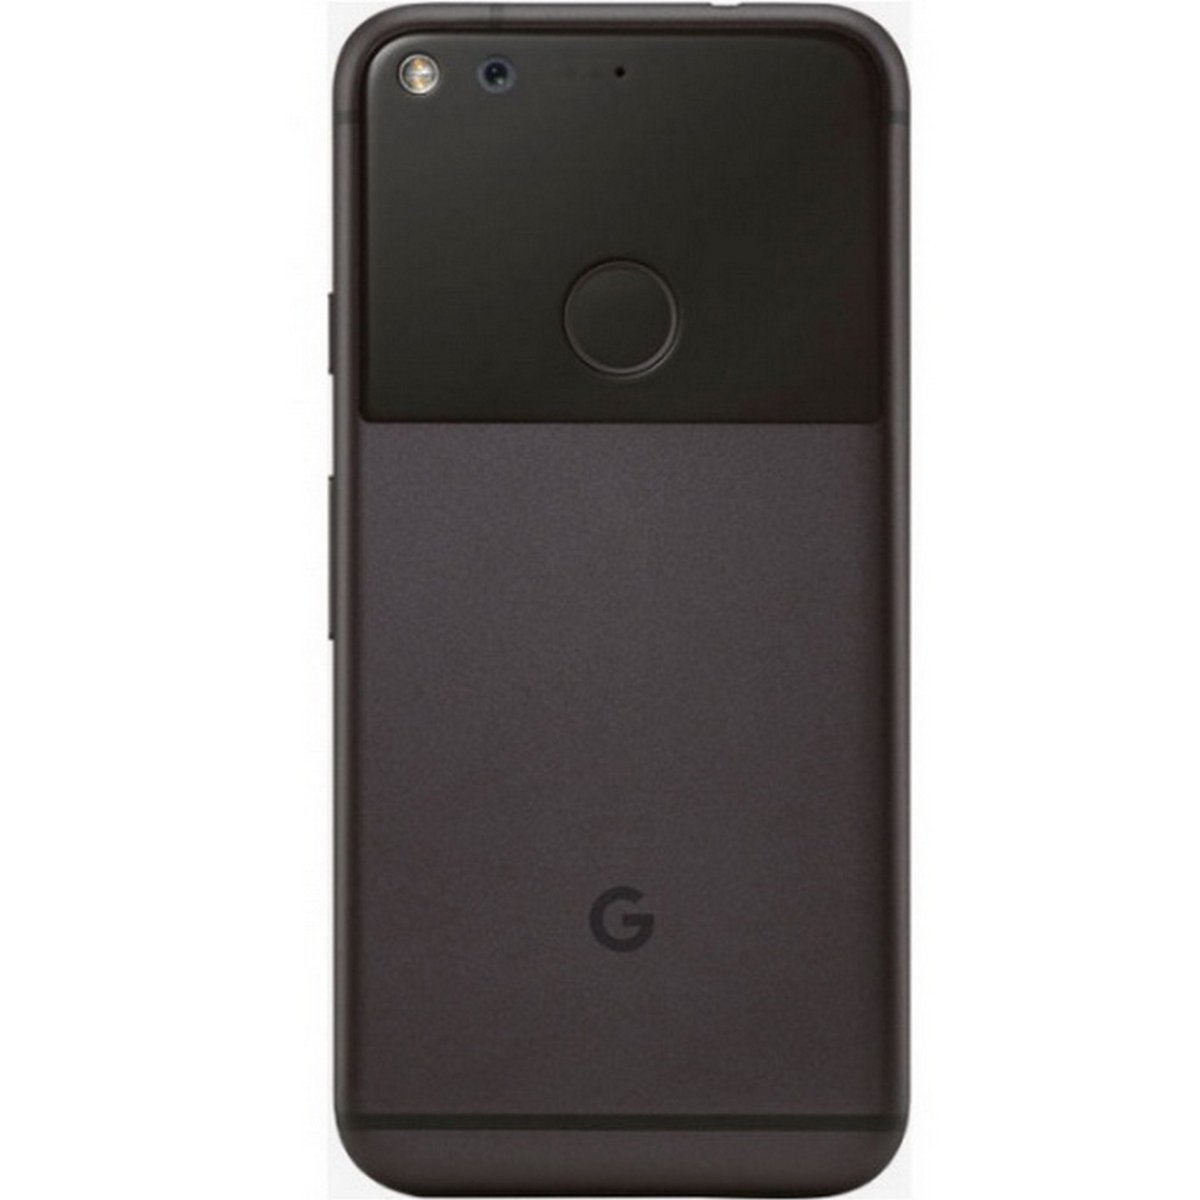 Google Pixel 32GB Black